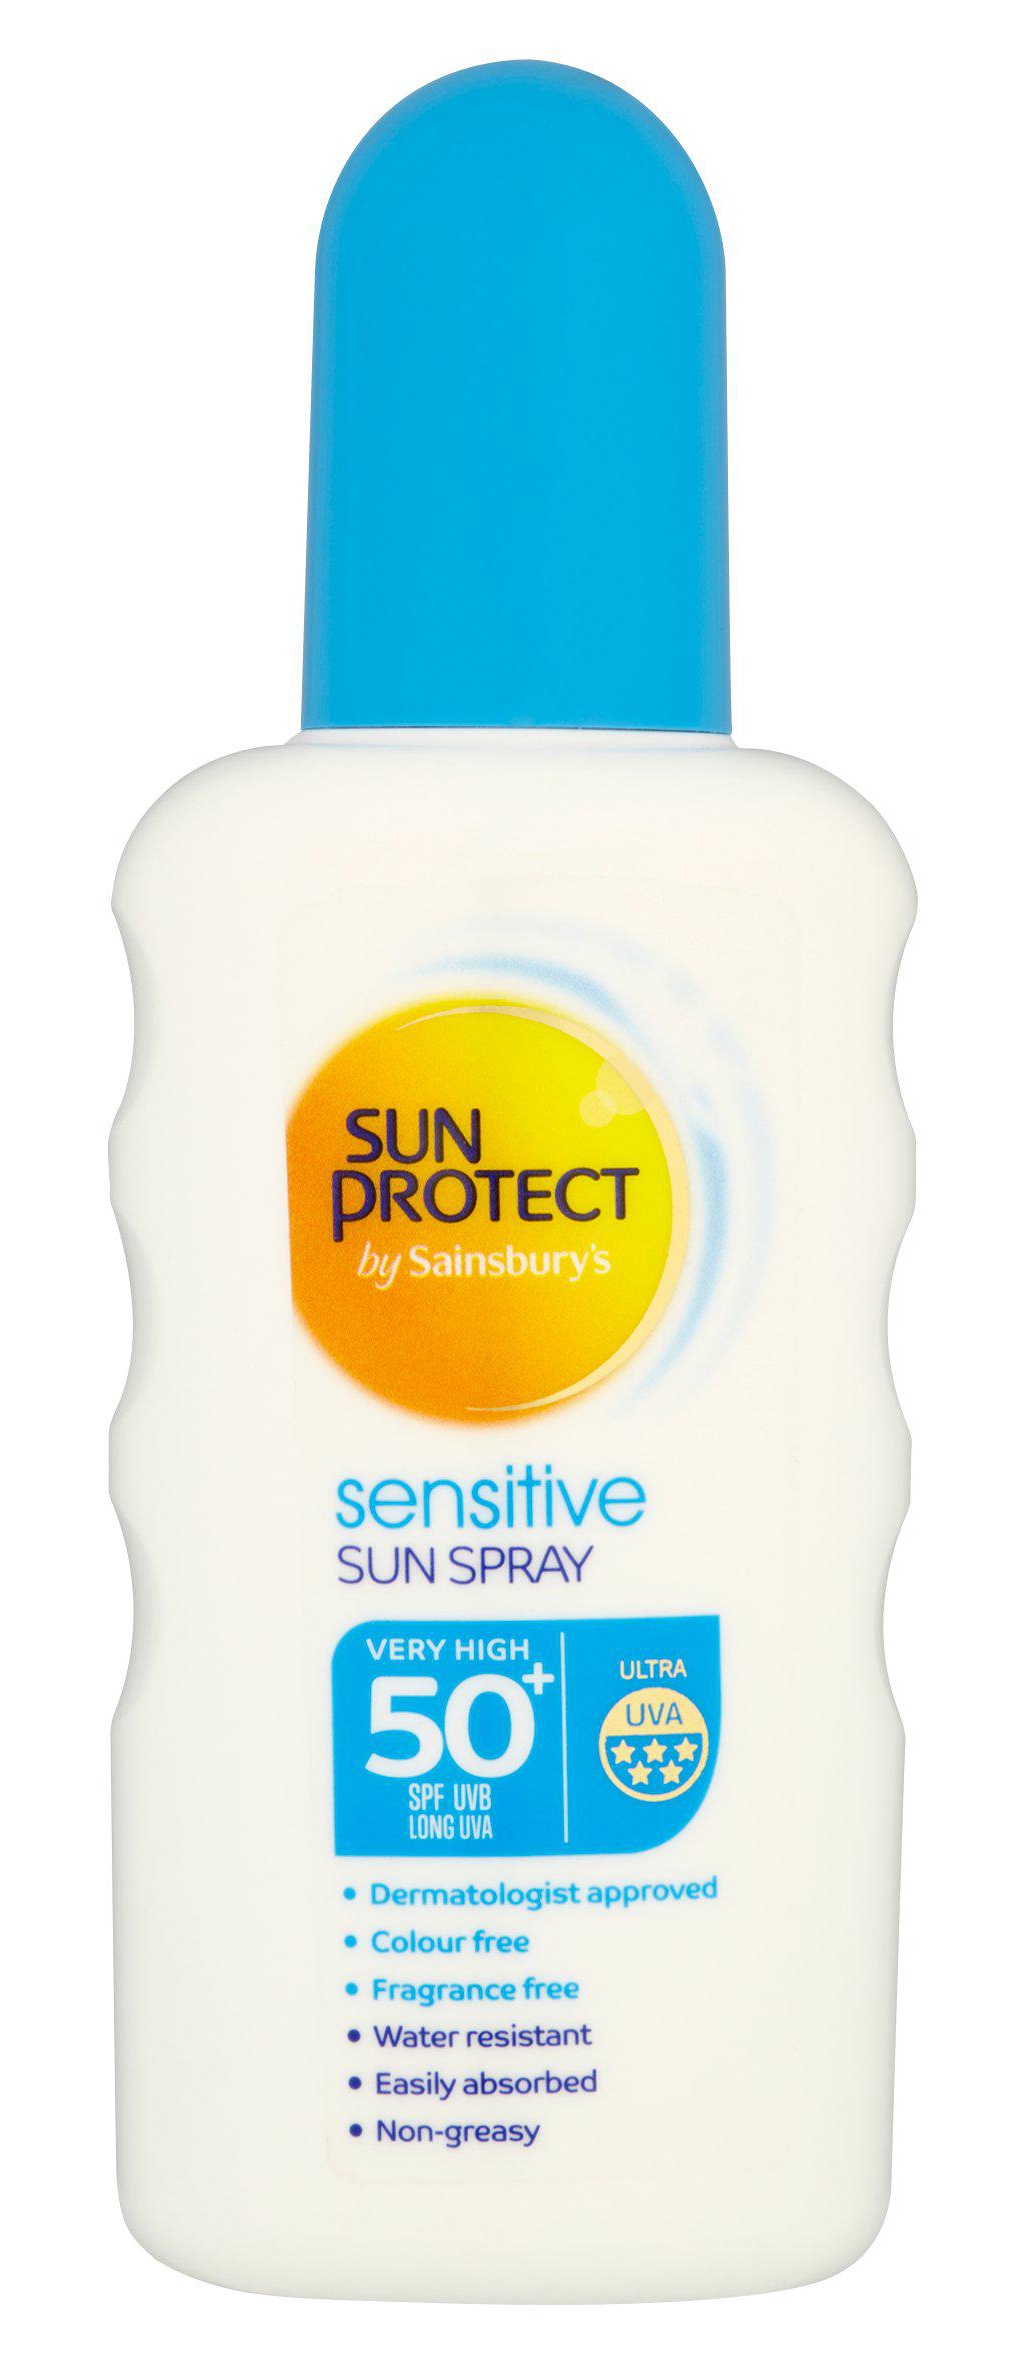 Sainsbury's Sun Protect Spray, Sensitive Spf50+ 5 Stars Uva